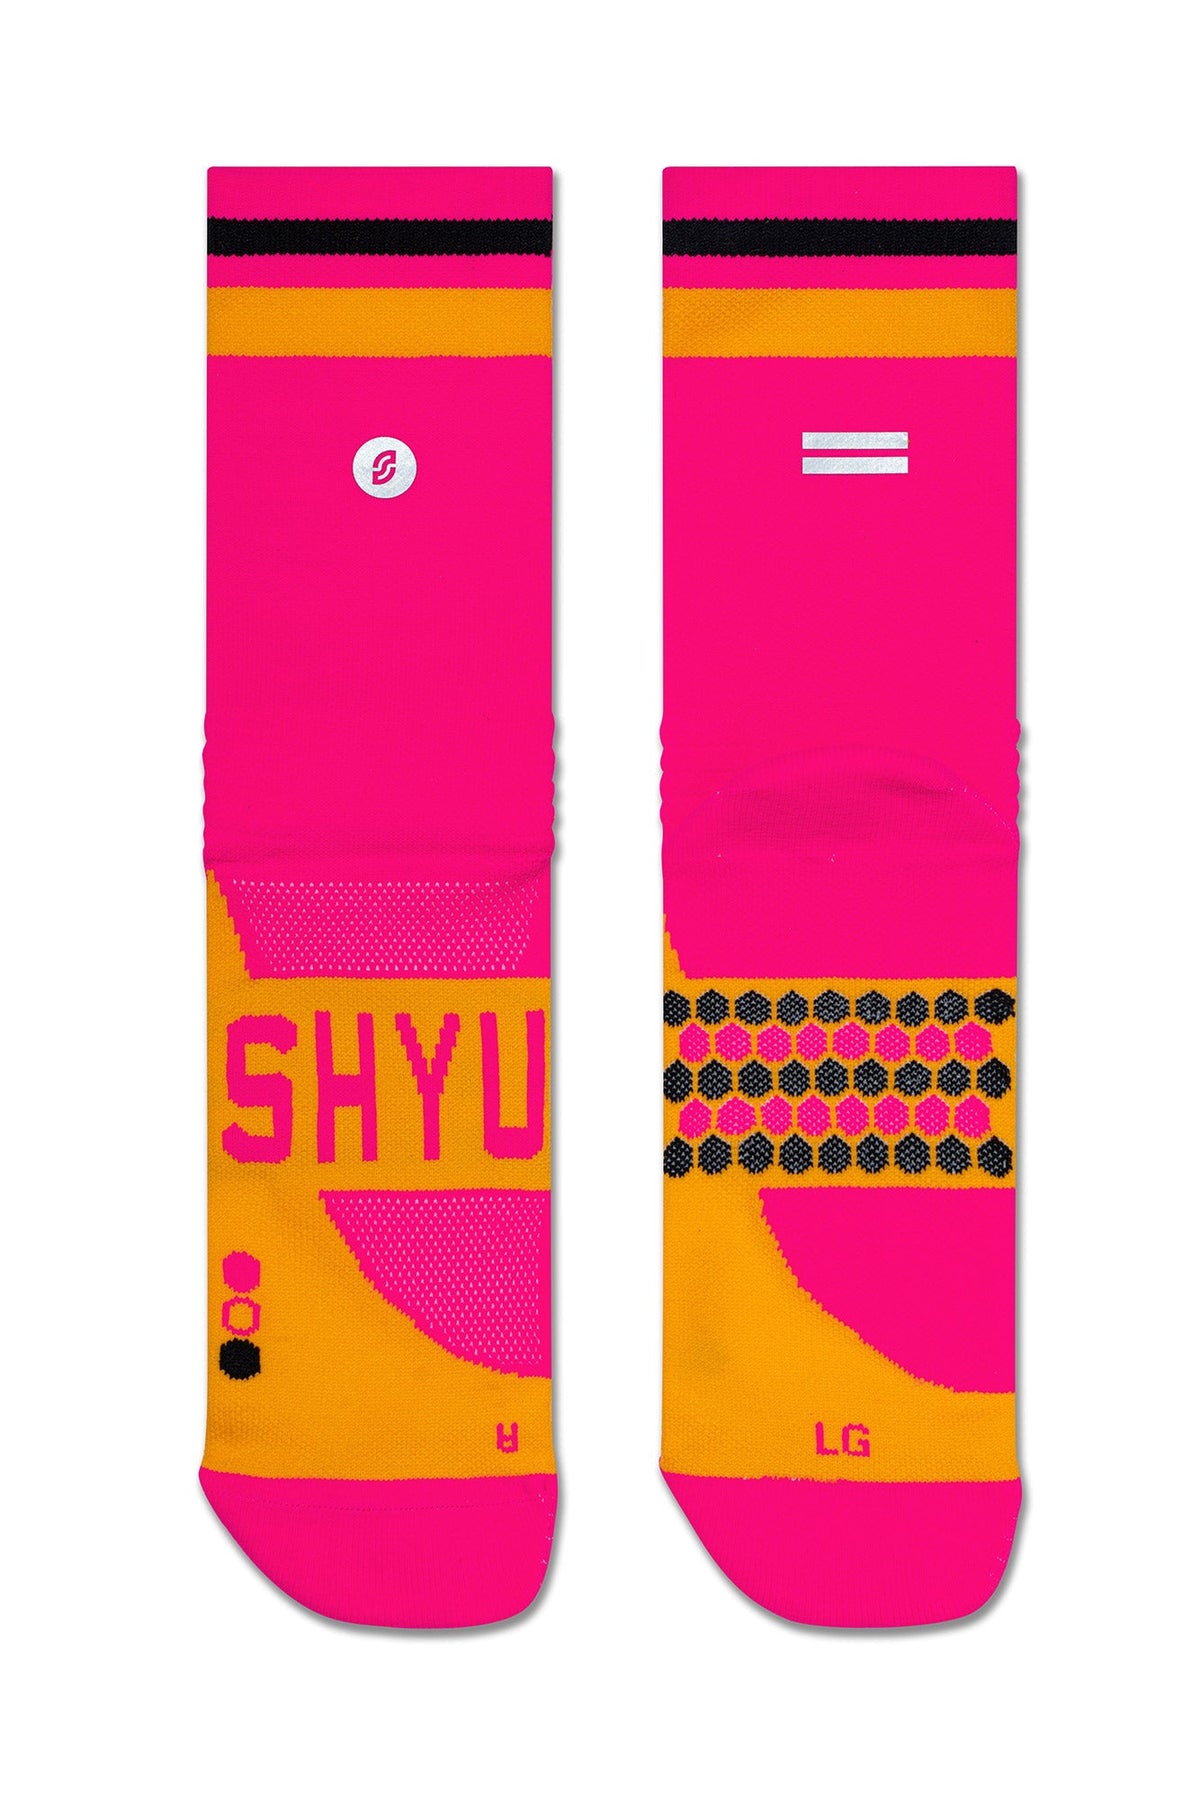 SHYU racing socks - pink | orange | black (small sizes)